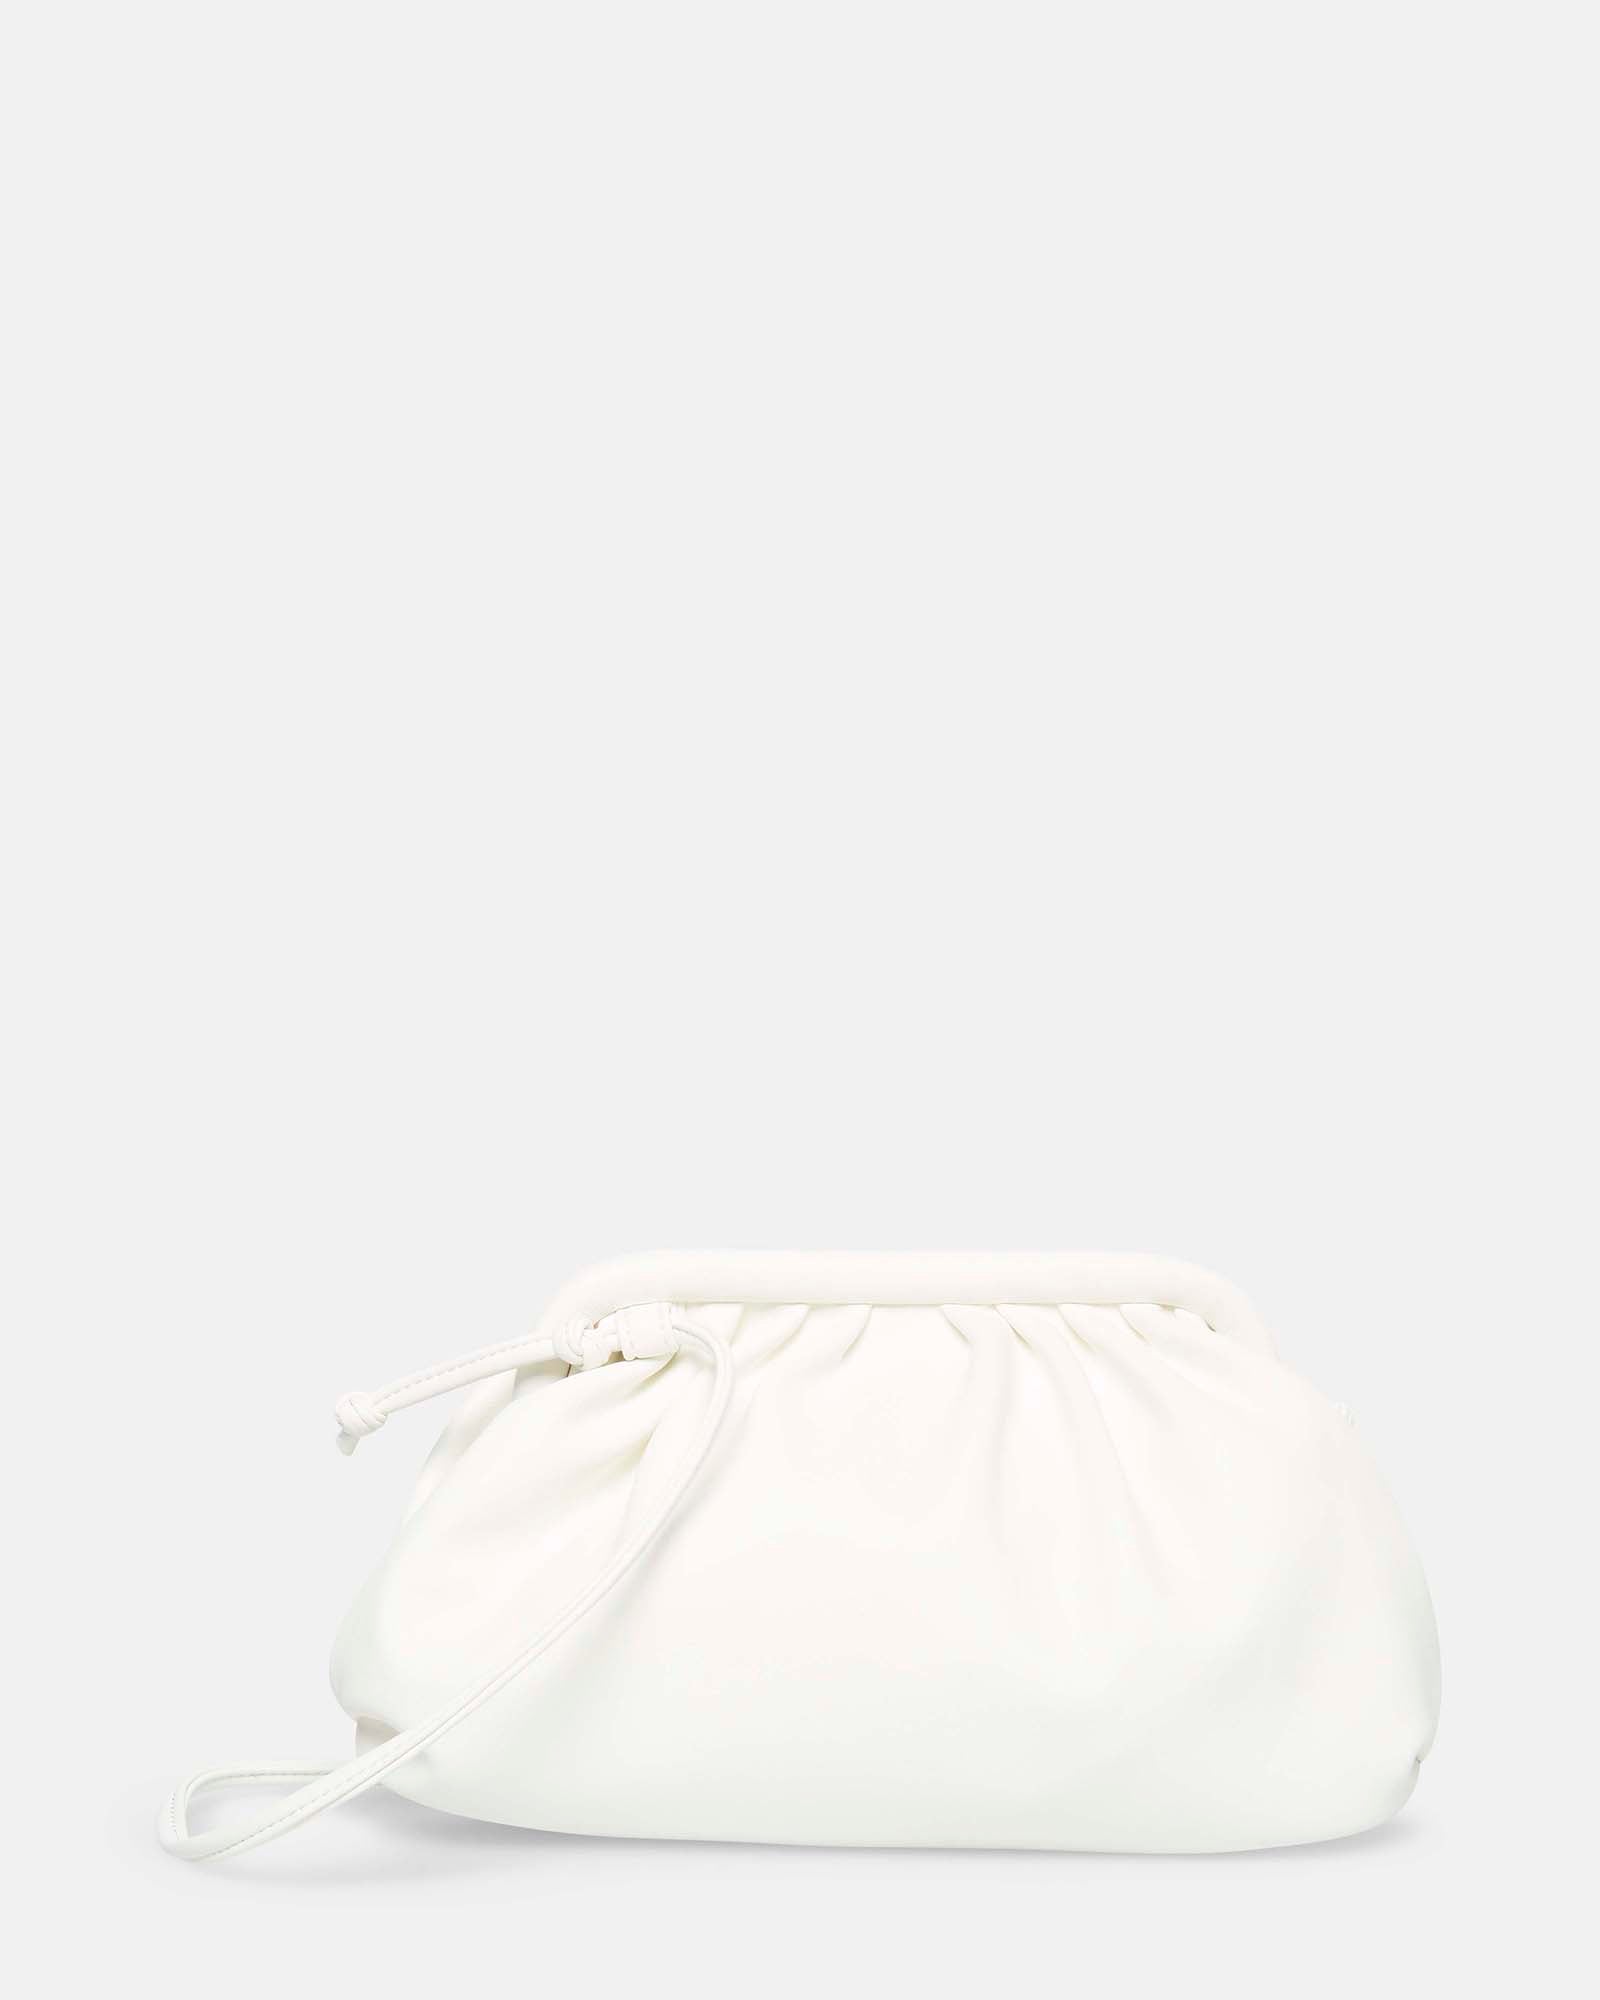 New White Steve Madden Purse Crossbody Bag Viral TikTok Quilted Cream Belian